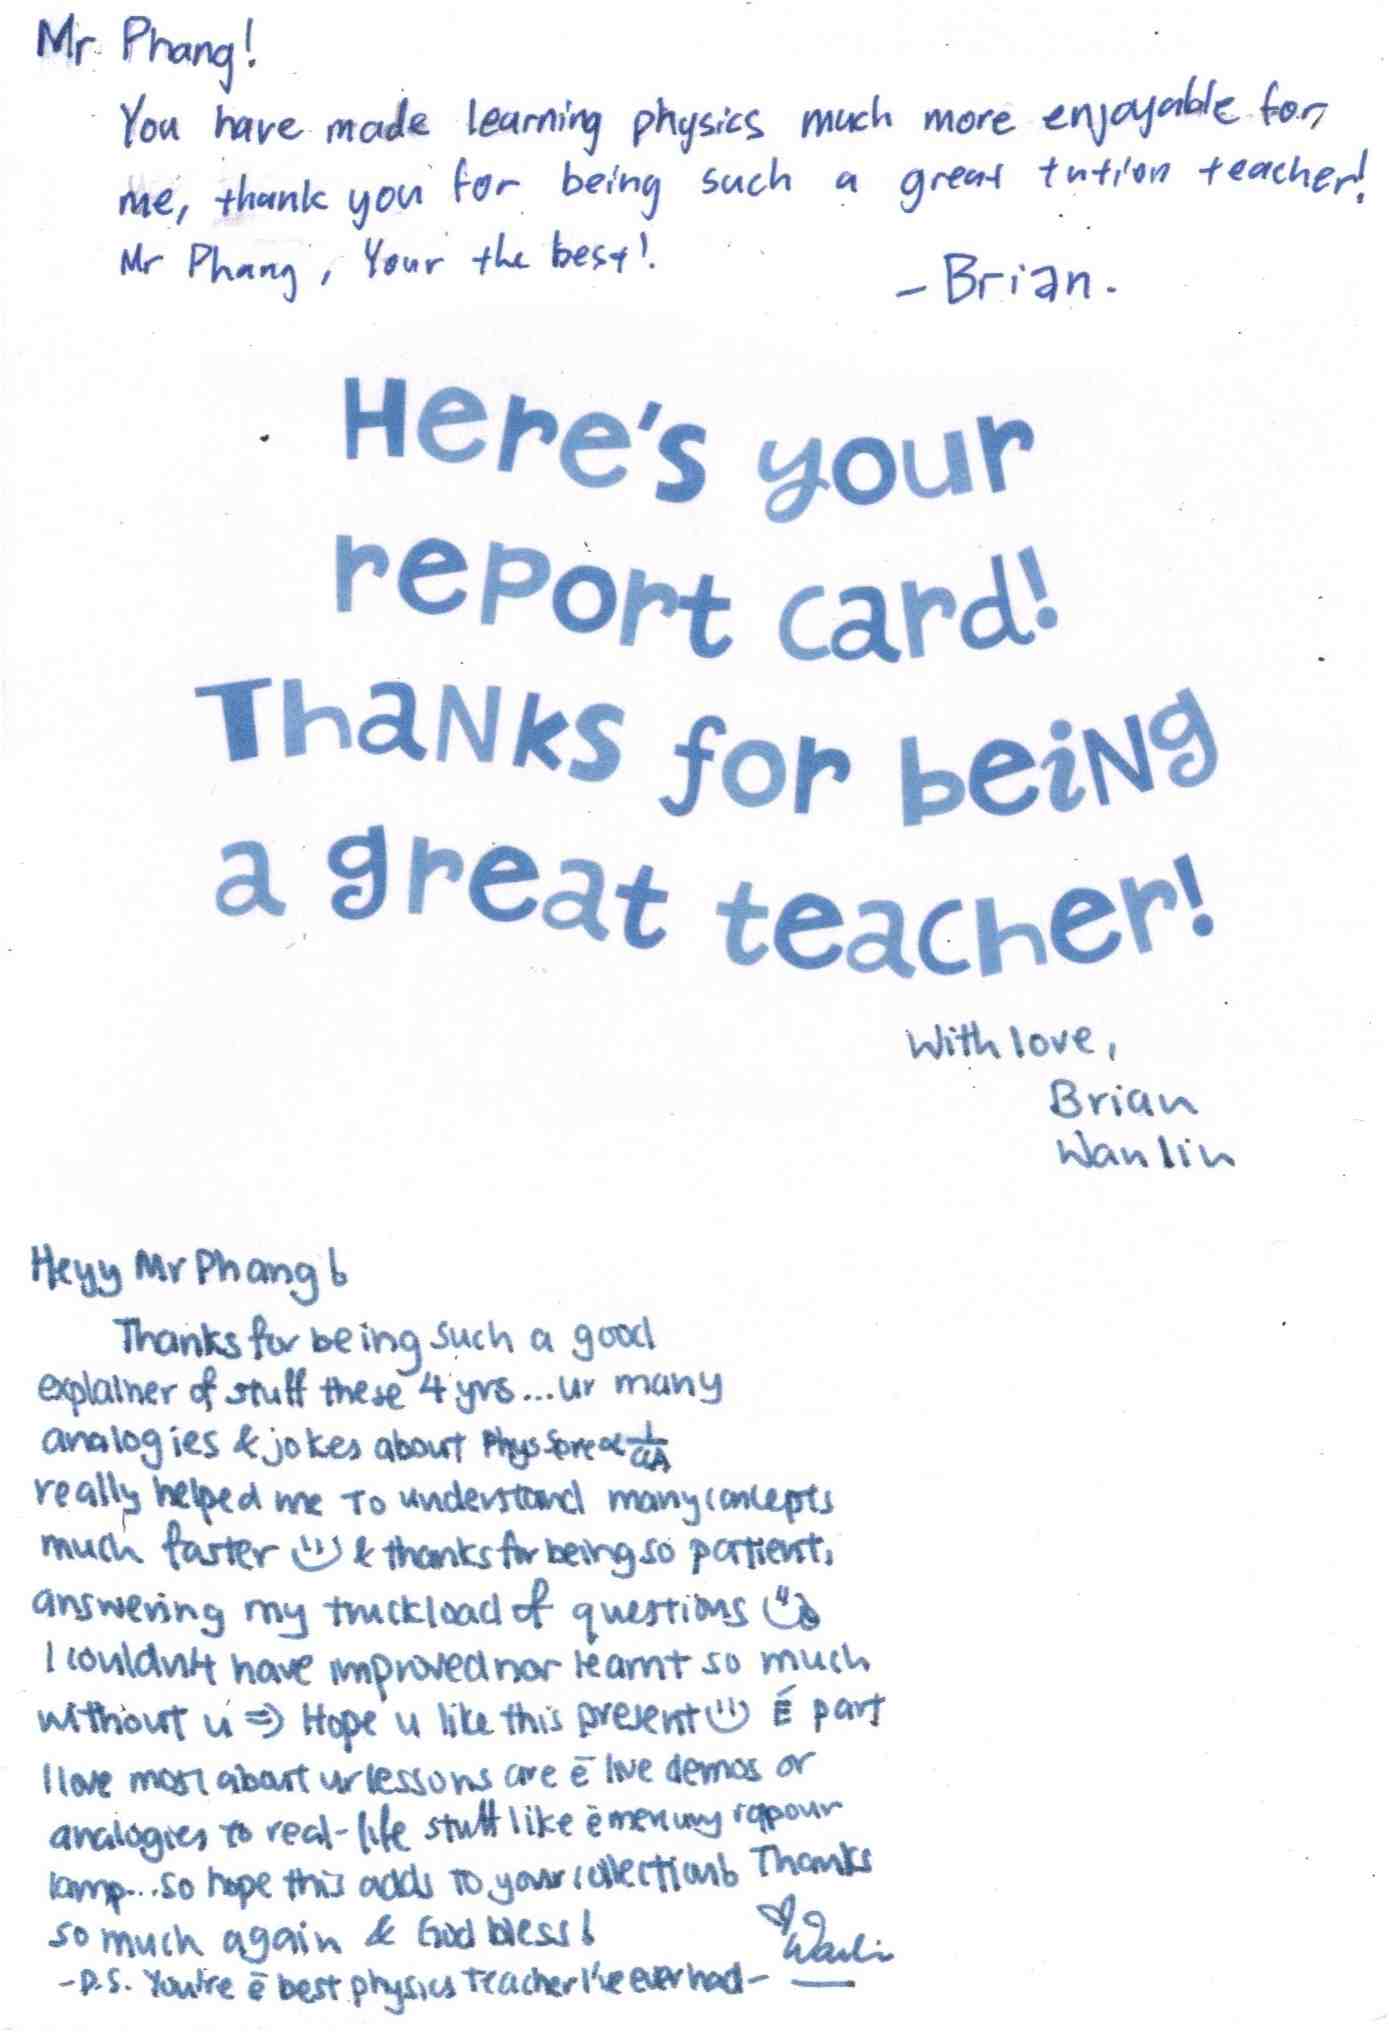 Brian and Wan Lins Teachers Day Card